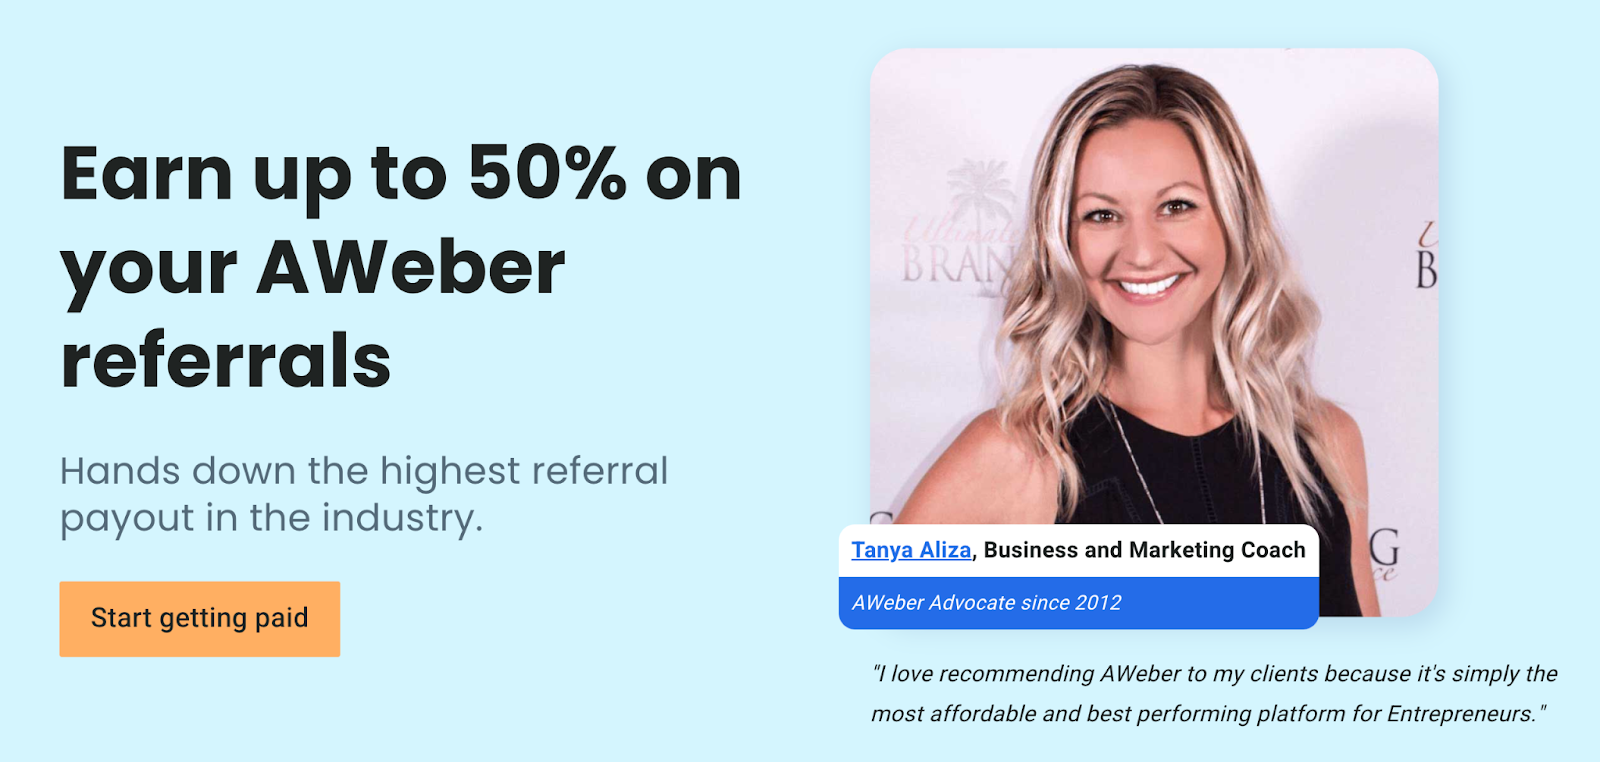 AWeber’s referral program incentivizes loyal customers